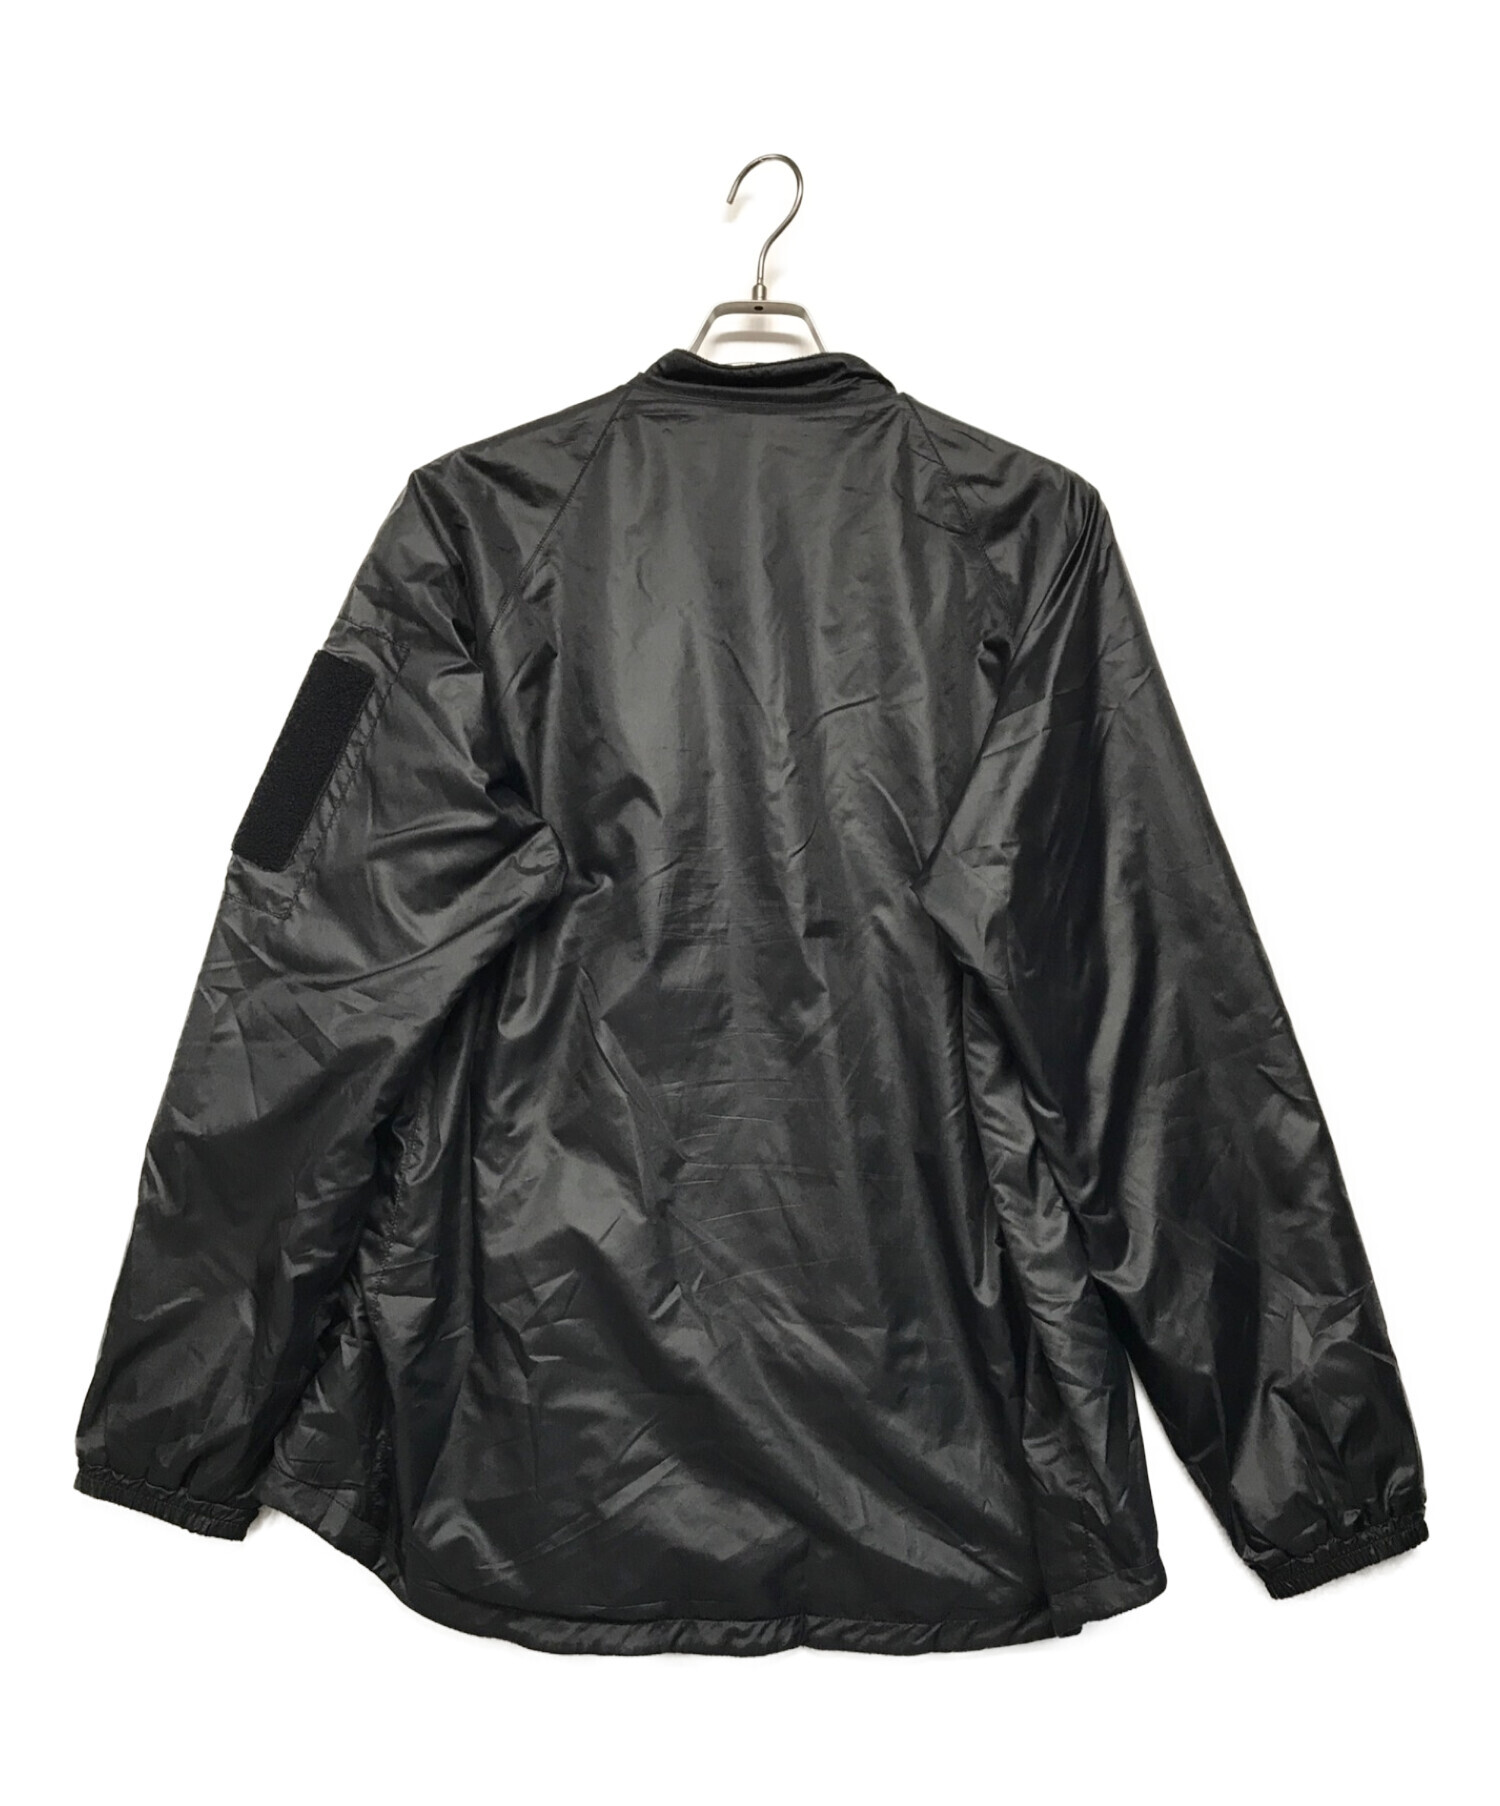 mout recon tailor (マウトリーコンテーラー) Lightweight Field Shirt ブラック サイズ:48